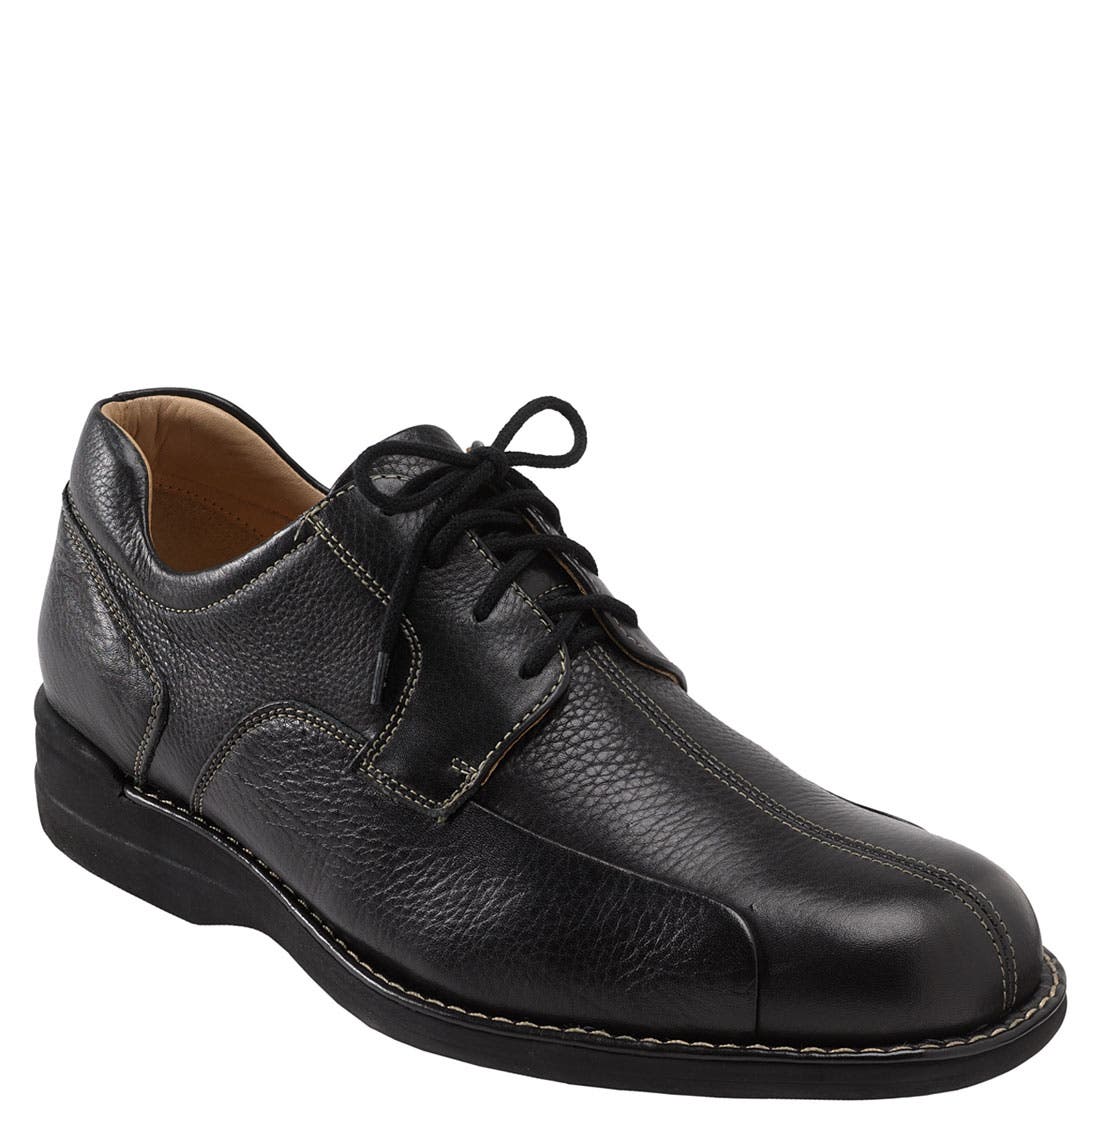 252964 PF50 Men's Shoes Size 9 M Dark Tan Leather Lace Up Johnston & Murphy